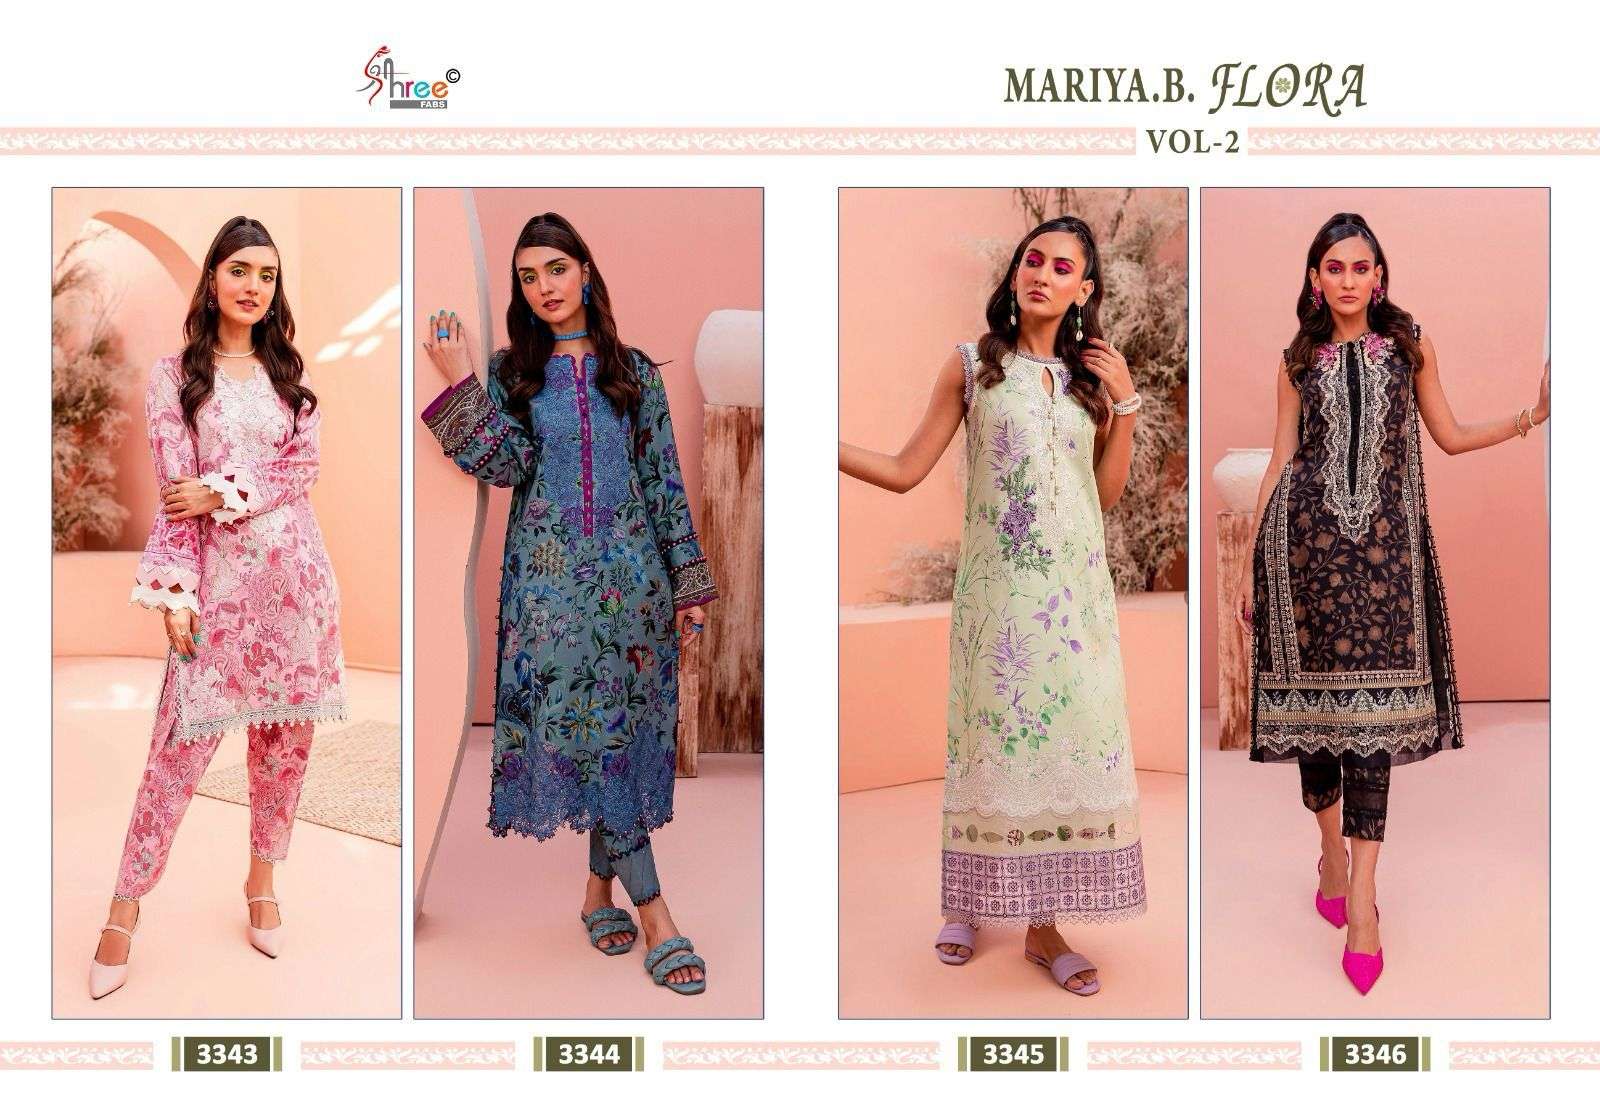 Shree Mariya B Flora Vol 2 Cotton Dupatta Pakistani Suits Wholesale catalog